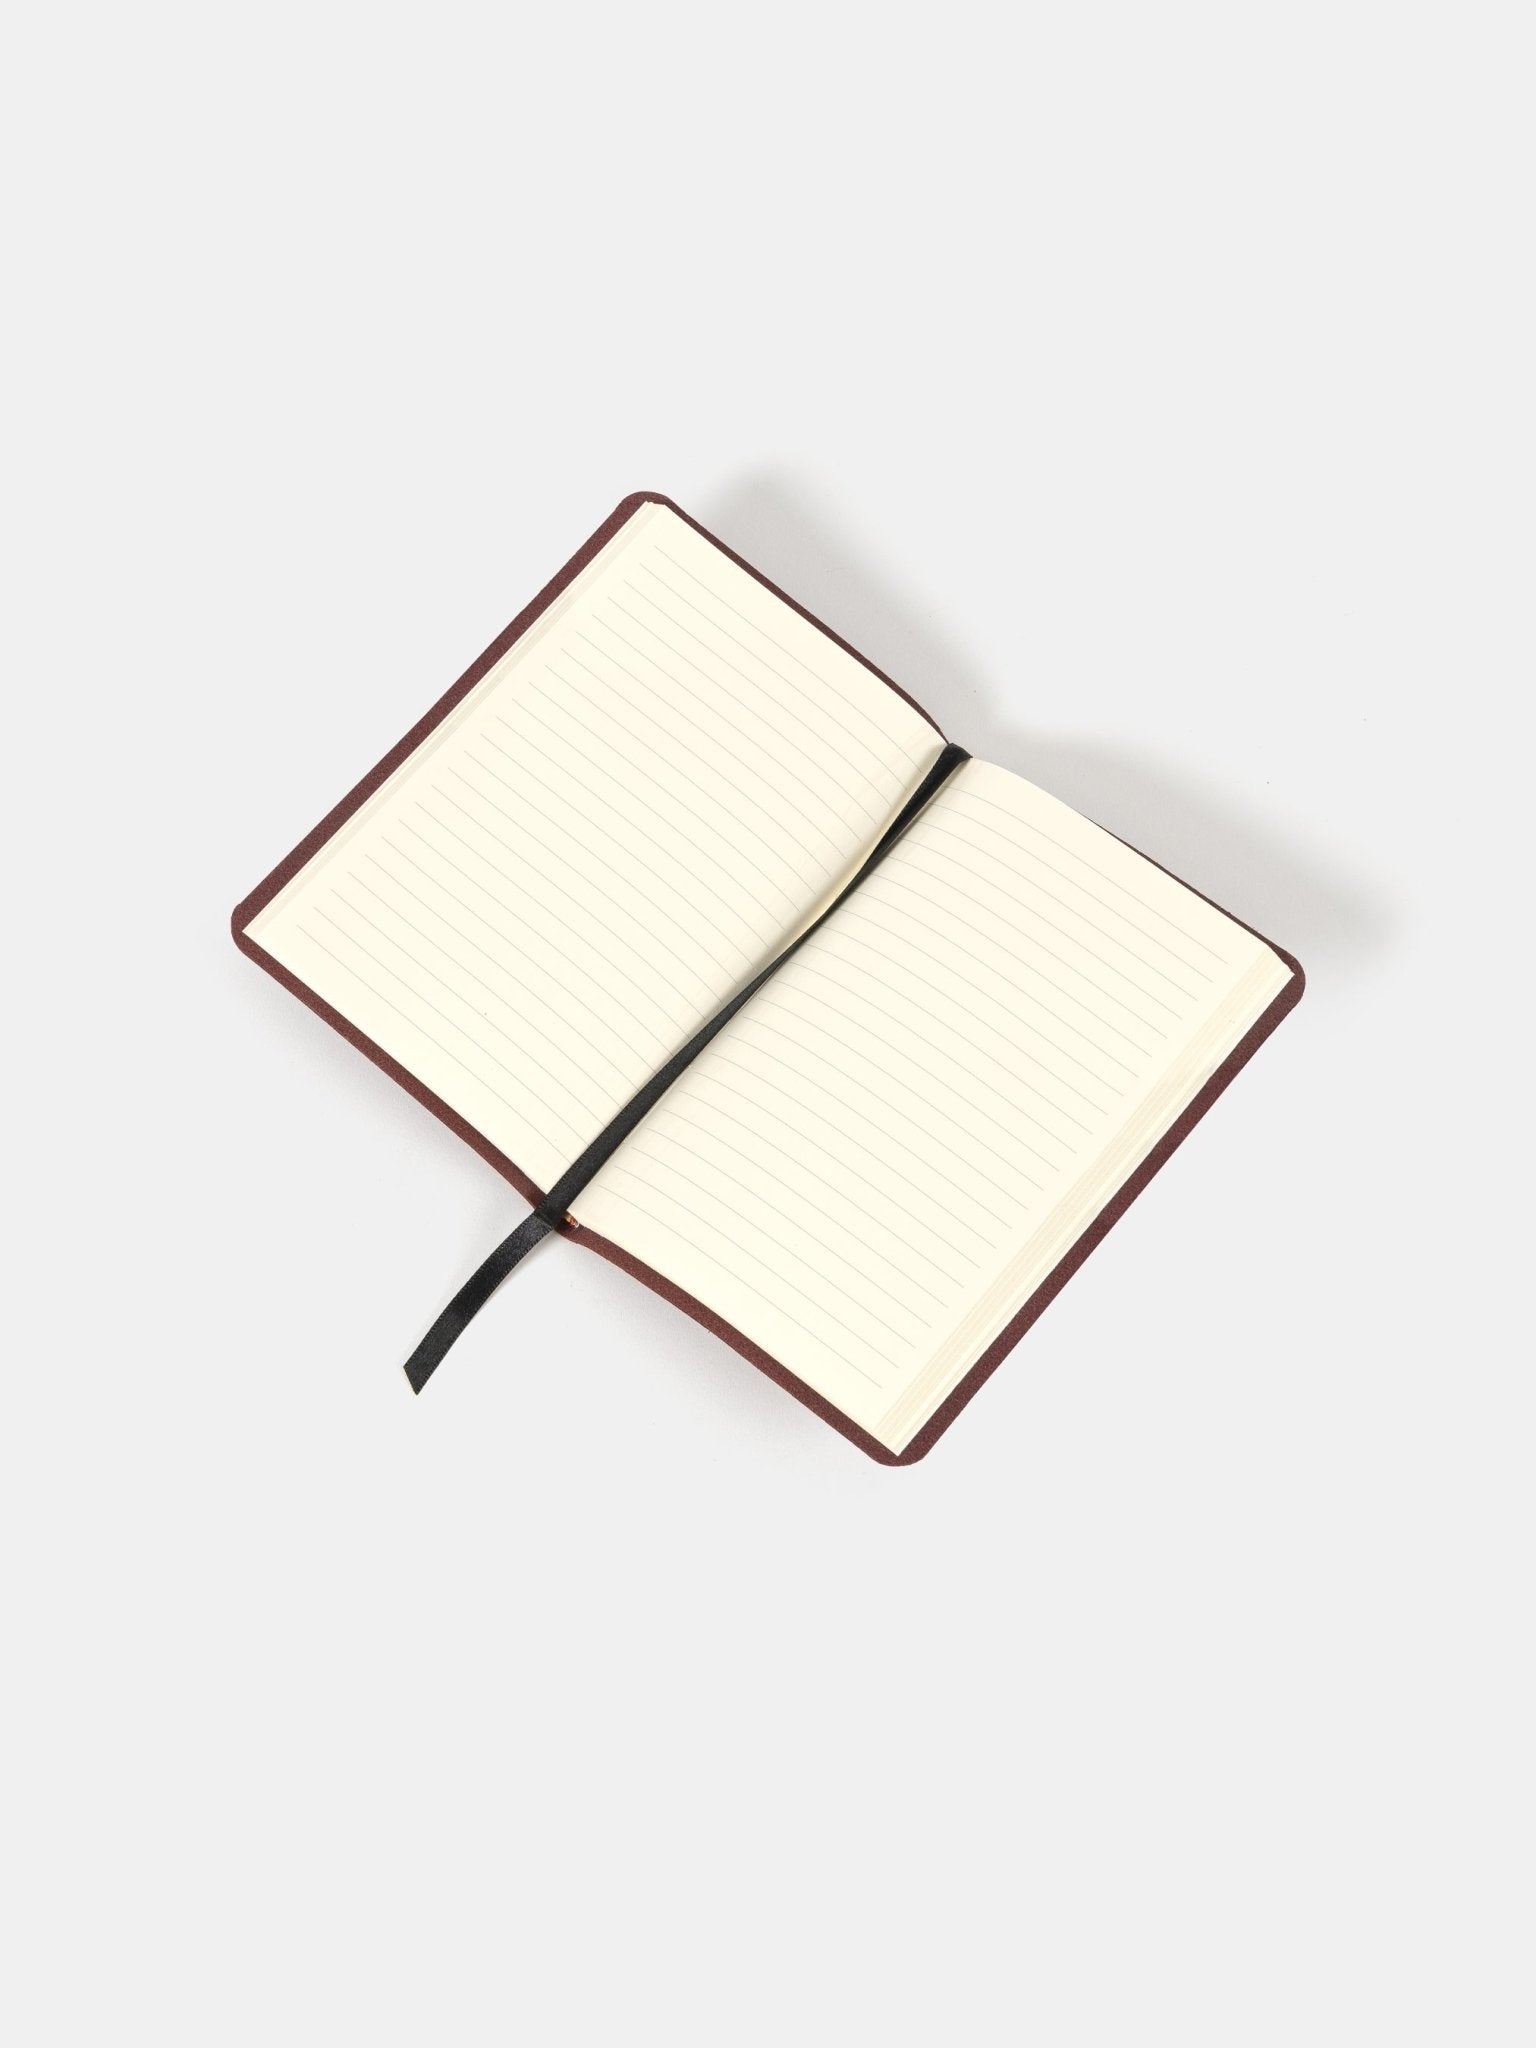 The Matilda A6 Notebook - Red